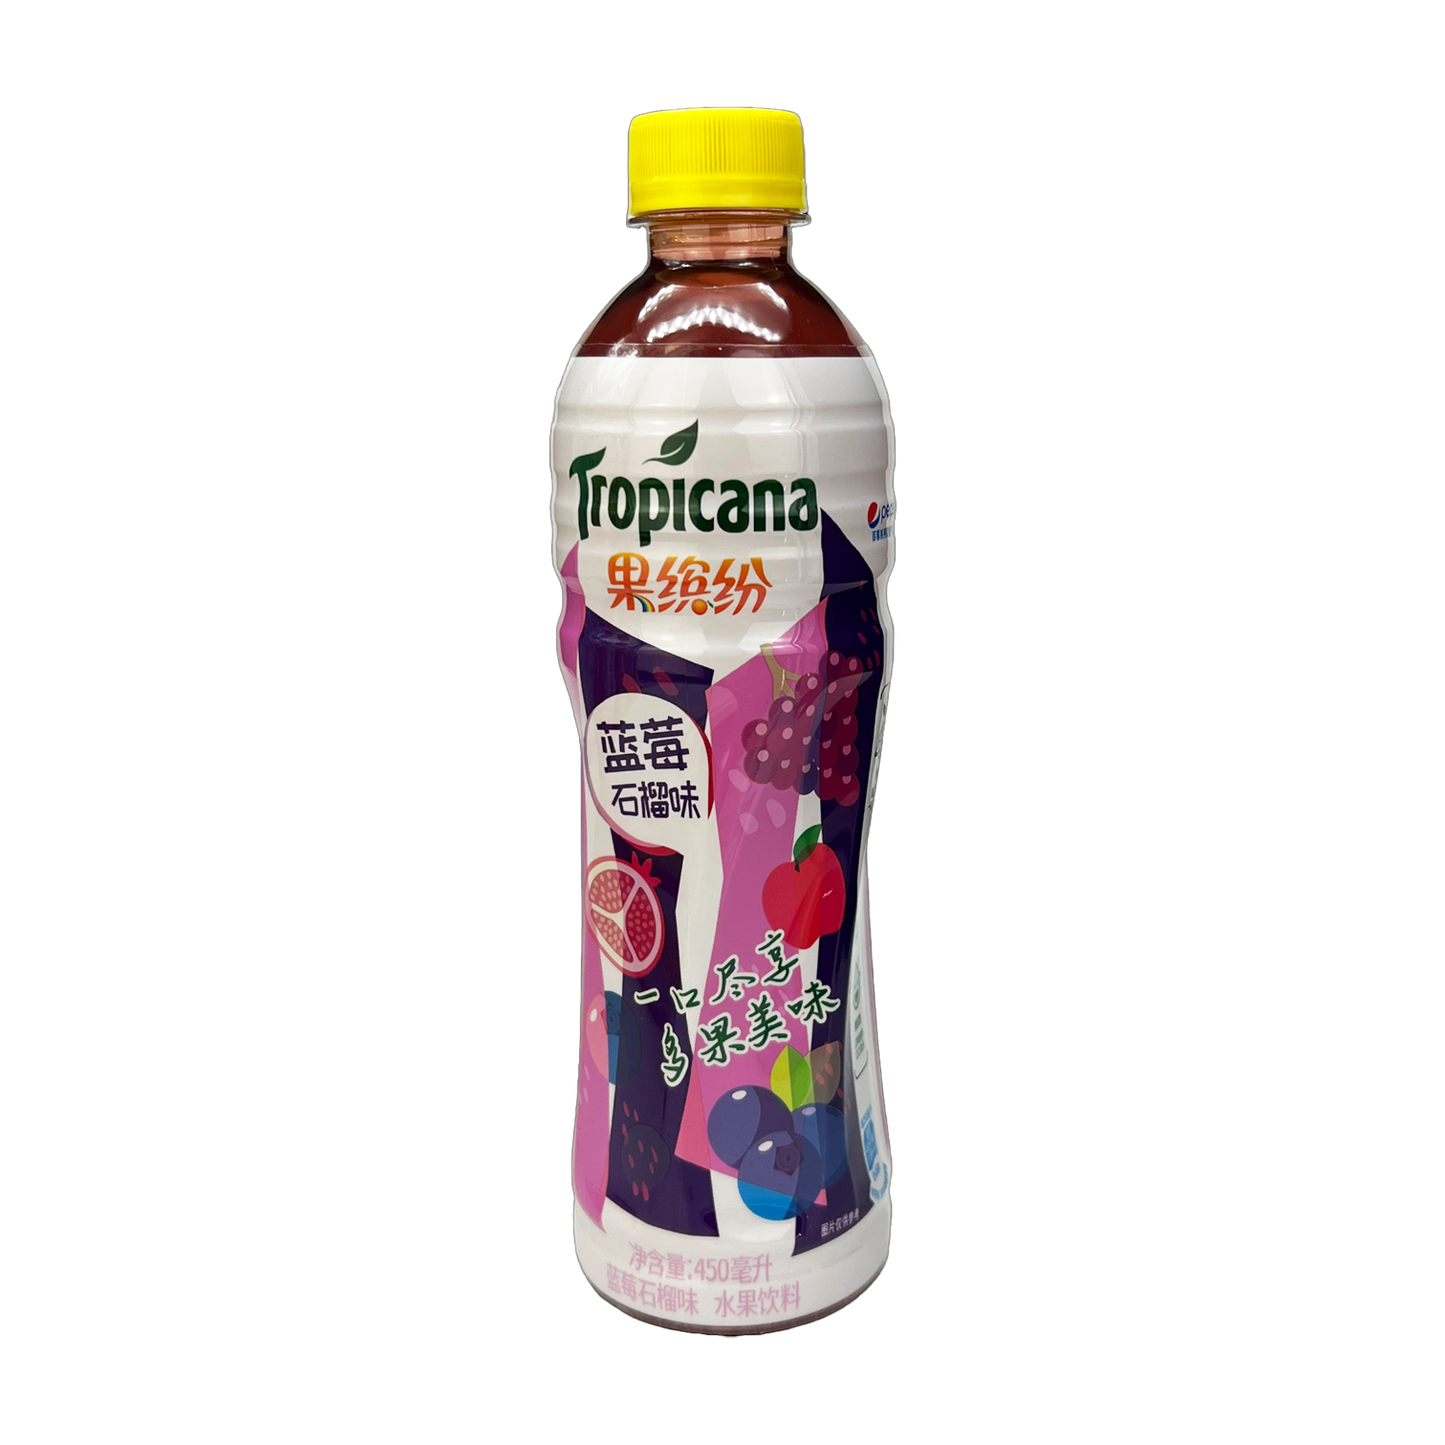 Tropicana Bottle